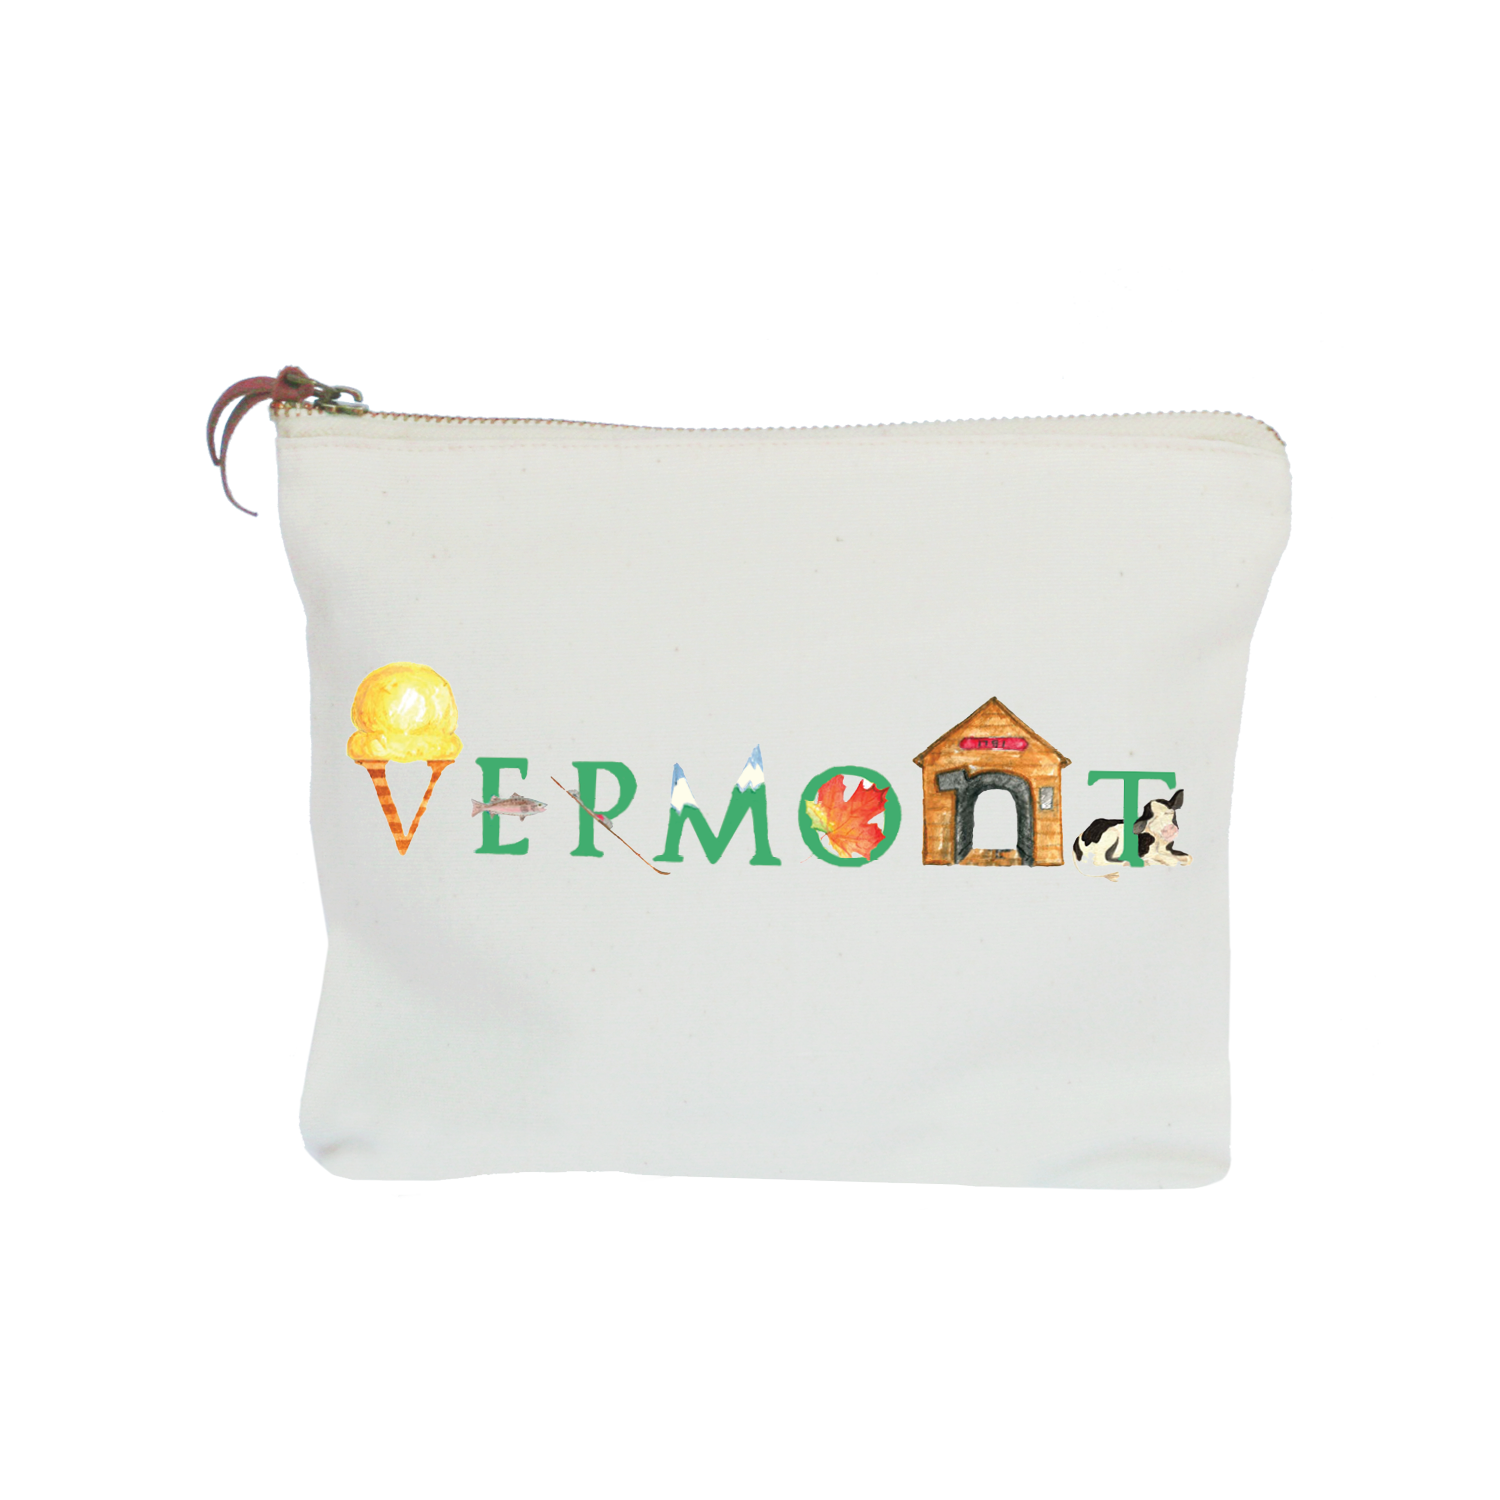 Vermont zipper pouch